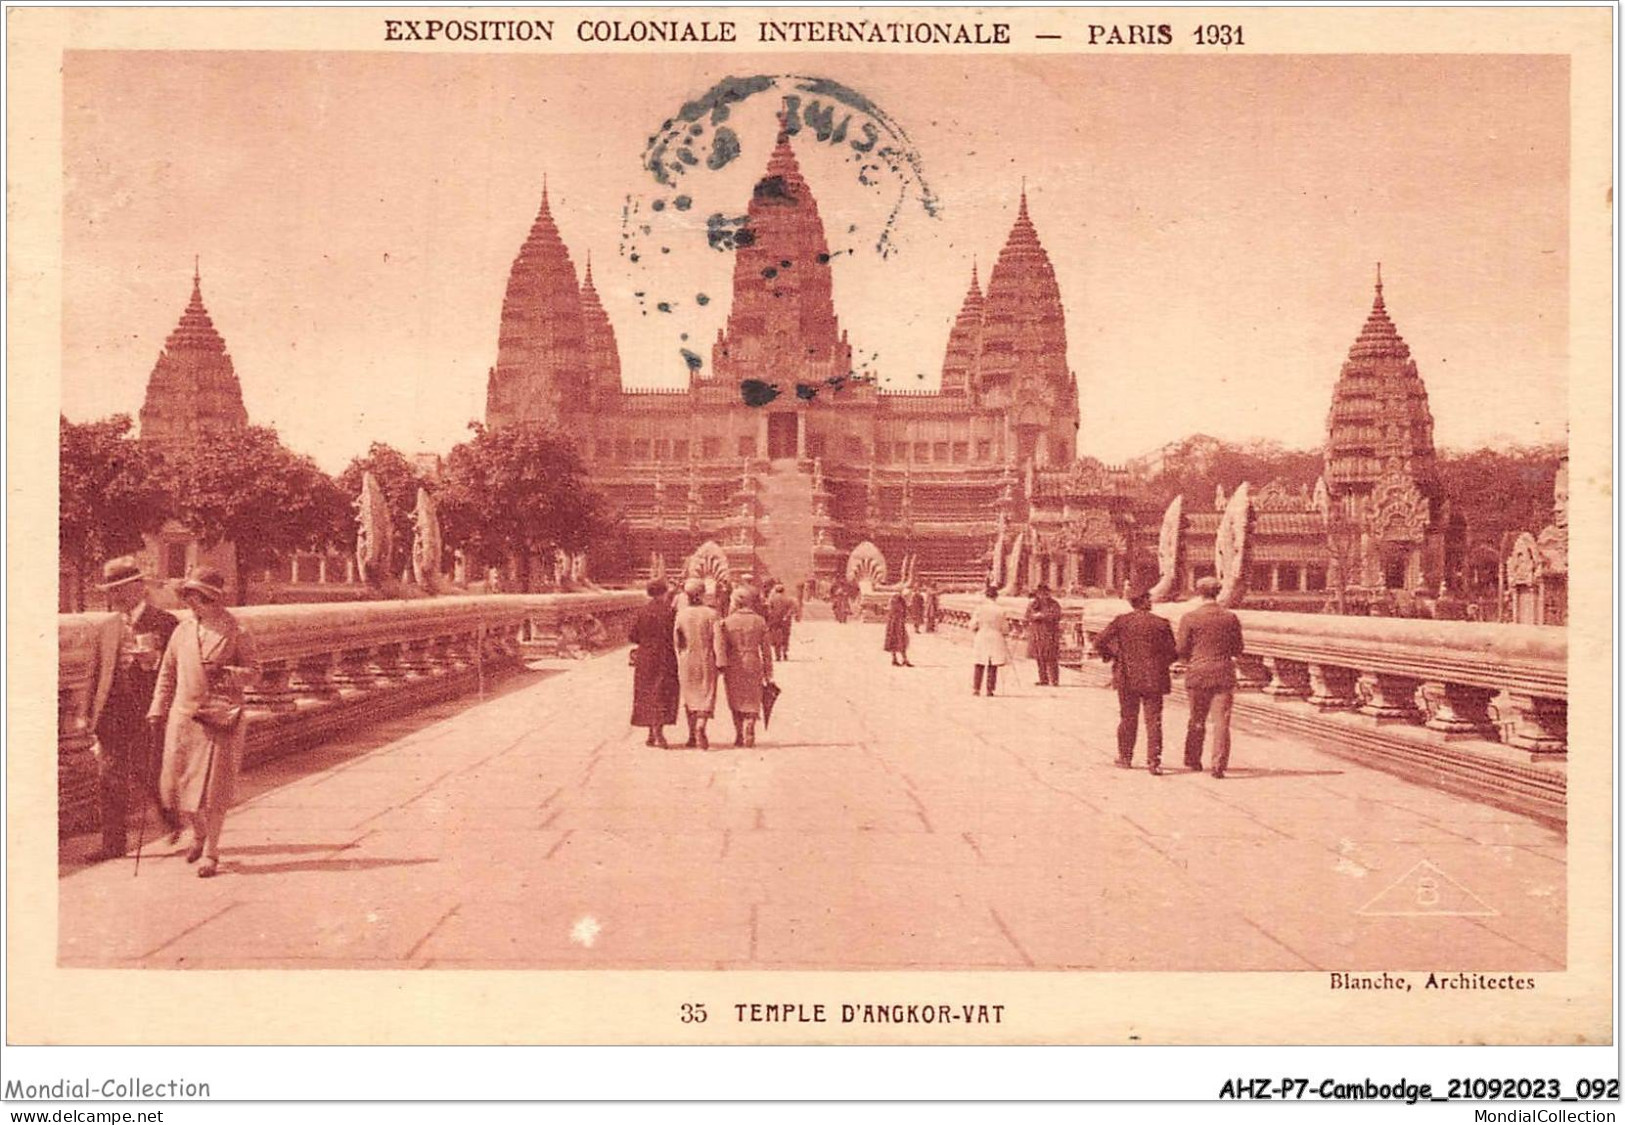 AHZP7-CAMBODGE-0642 - EXPOSITION COLONIALE INTERNATIONALE - PARIS 1931 - TEMPLE D'ANGKOR-VAT - Cambodge